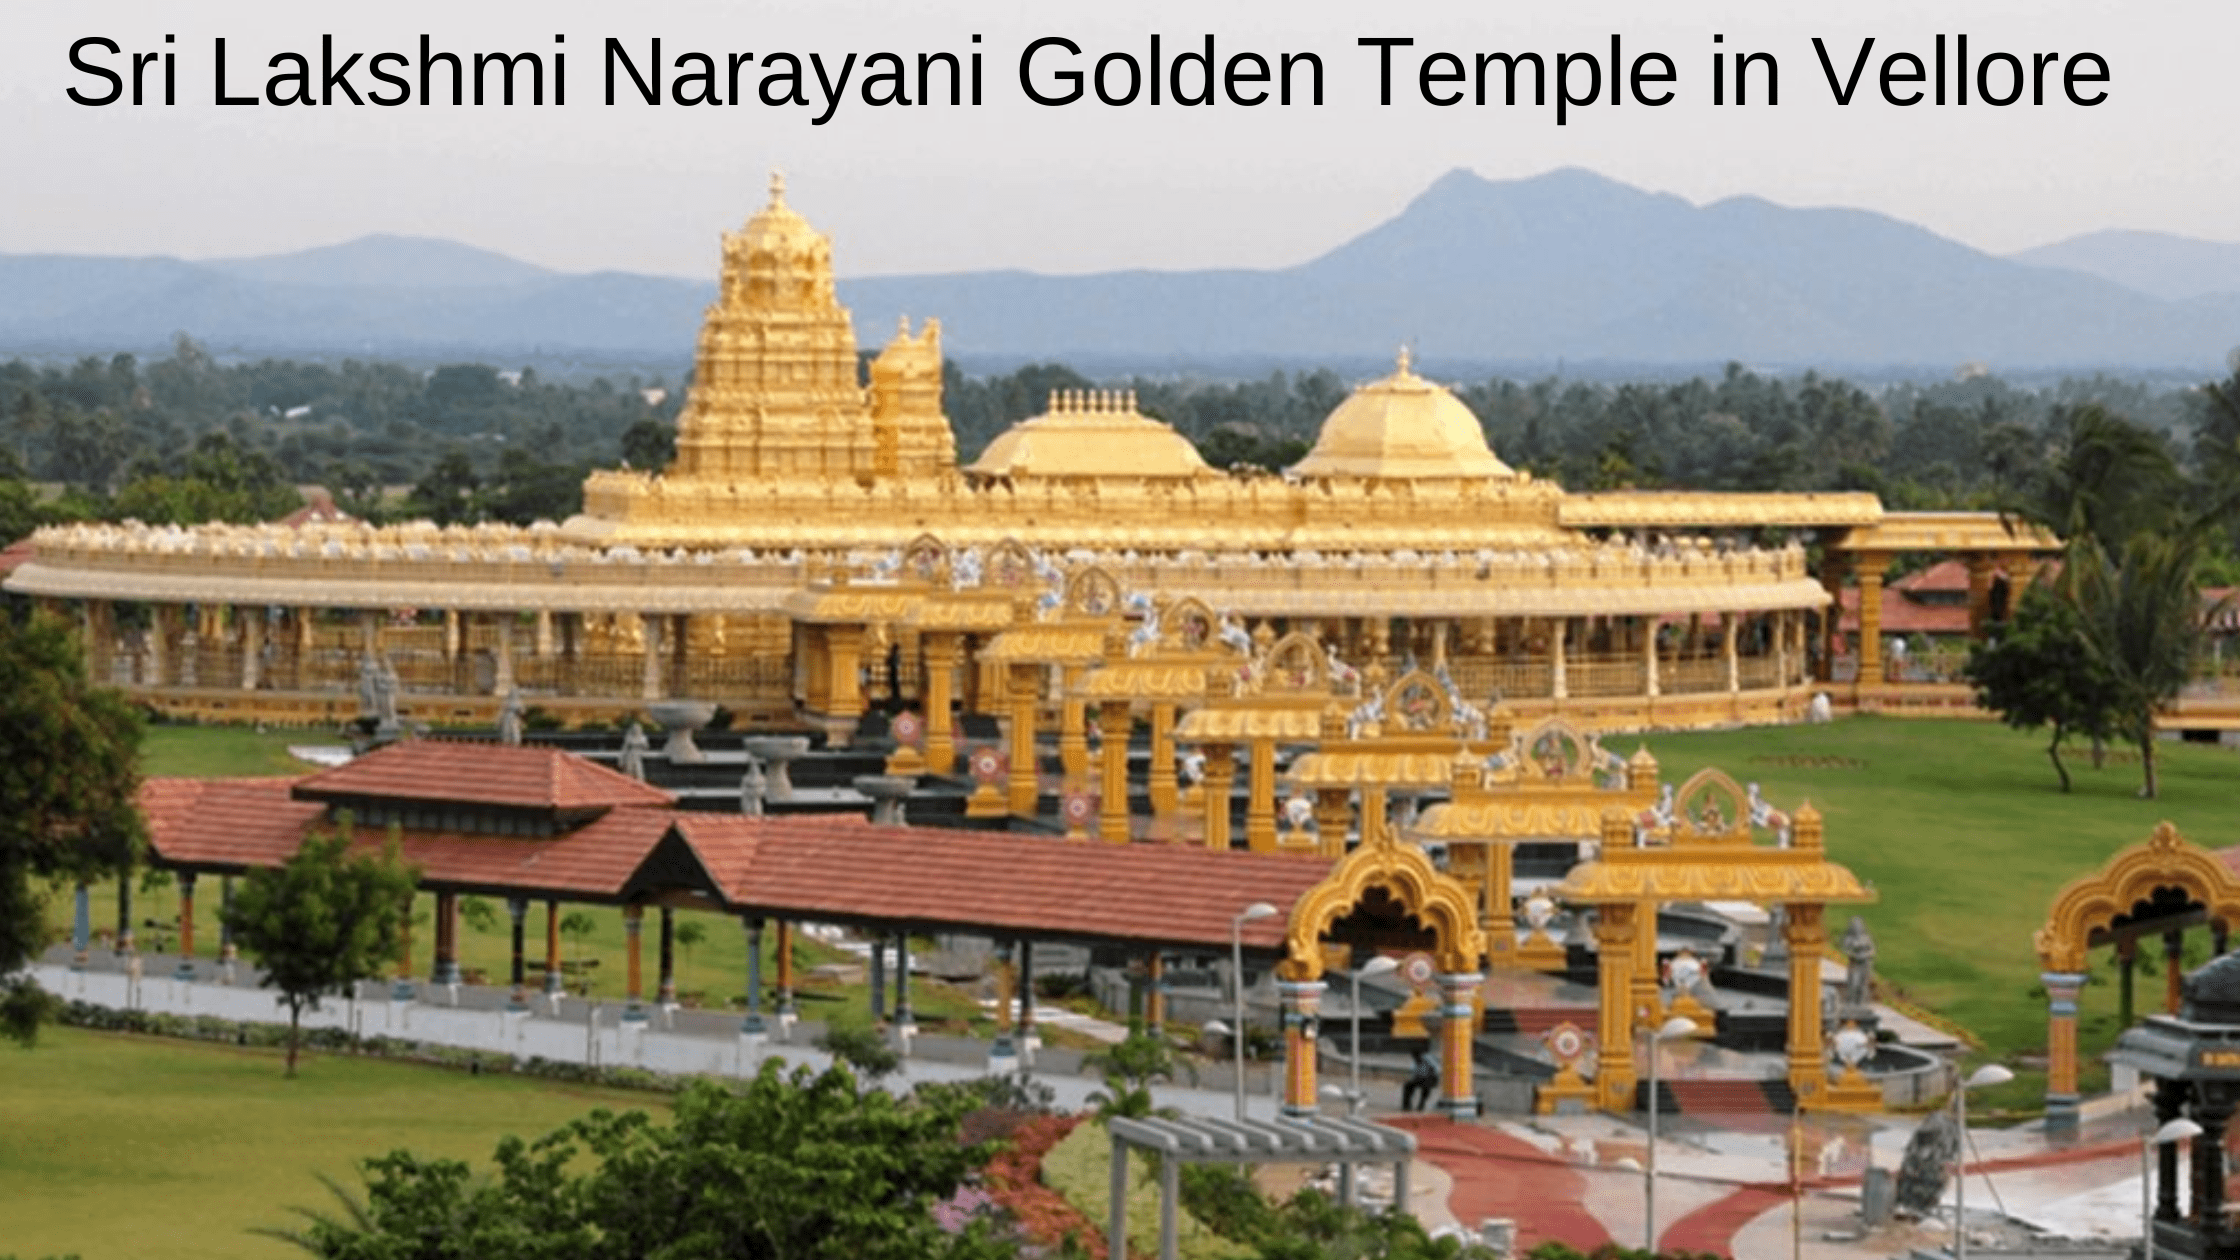 Timings of Sri Lakshmi Narayani Golden Temple in Vellore